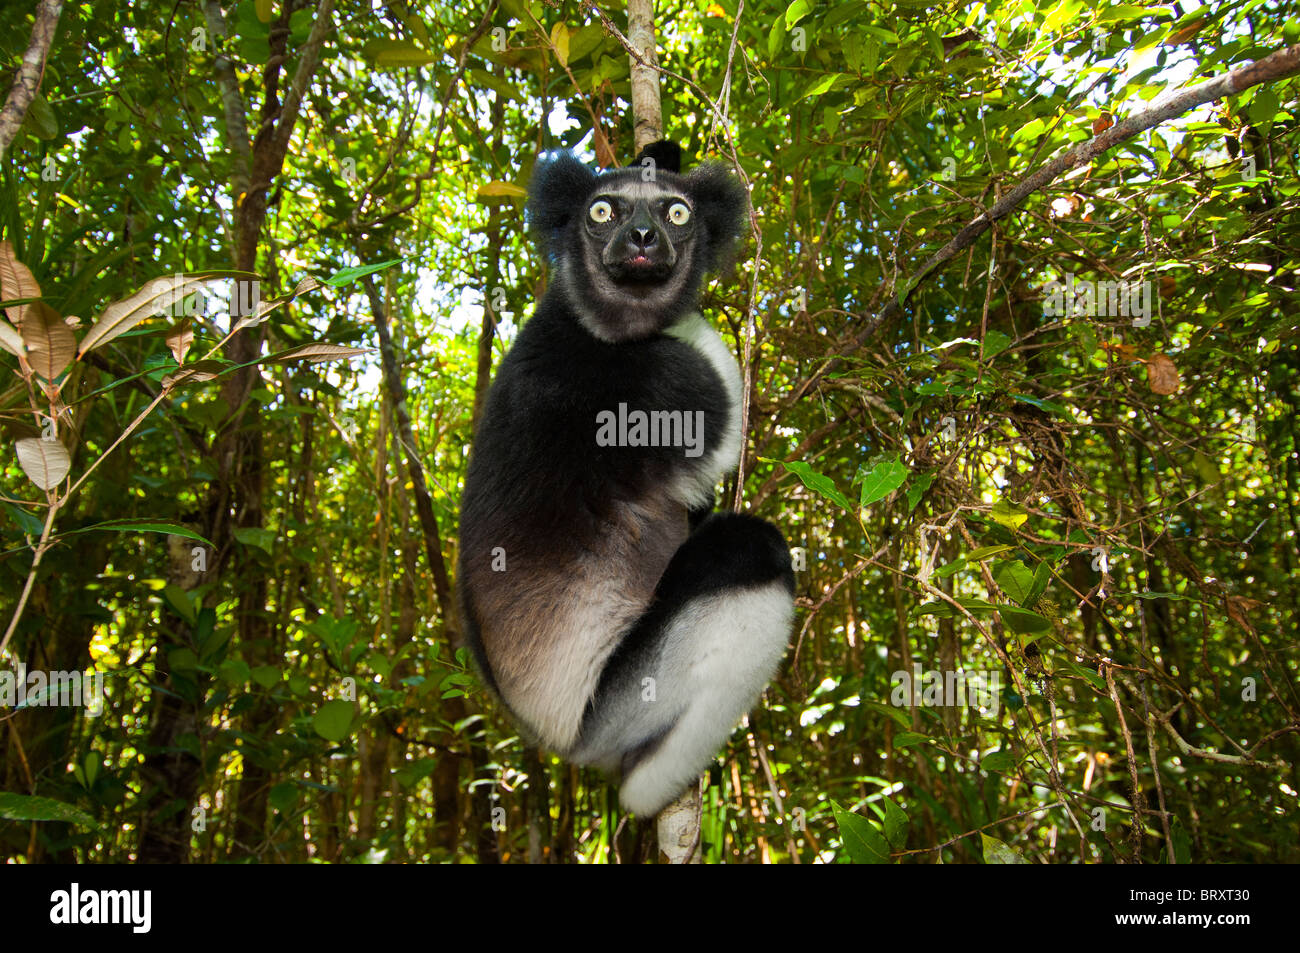 Lemur Tierwelt Diadem Sifaka Propithecus Diadema Edwardsi Madagaskar Madagaskar Lemuren wilden Wald Regenwald Baum Halbaffen Stockfoto